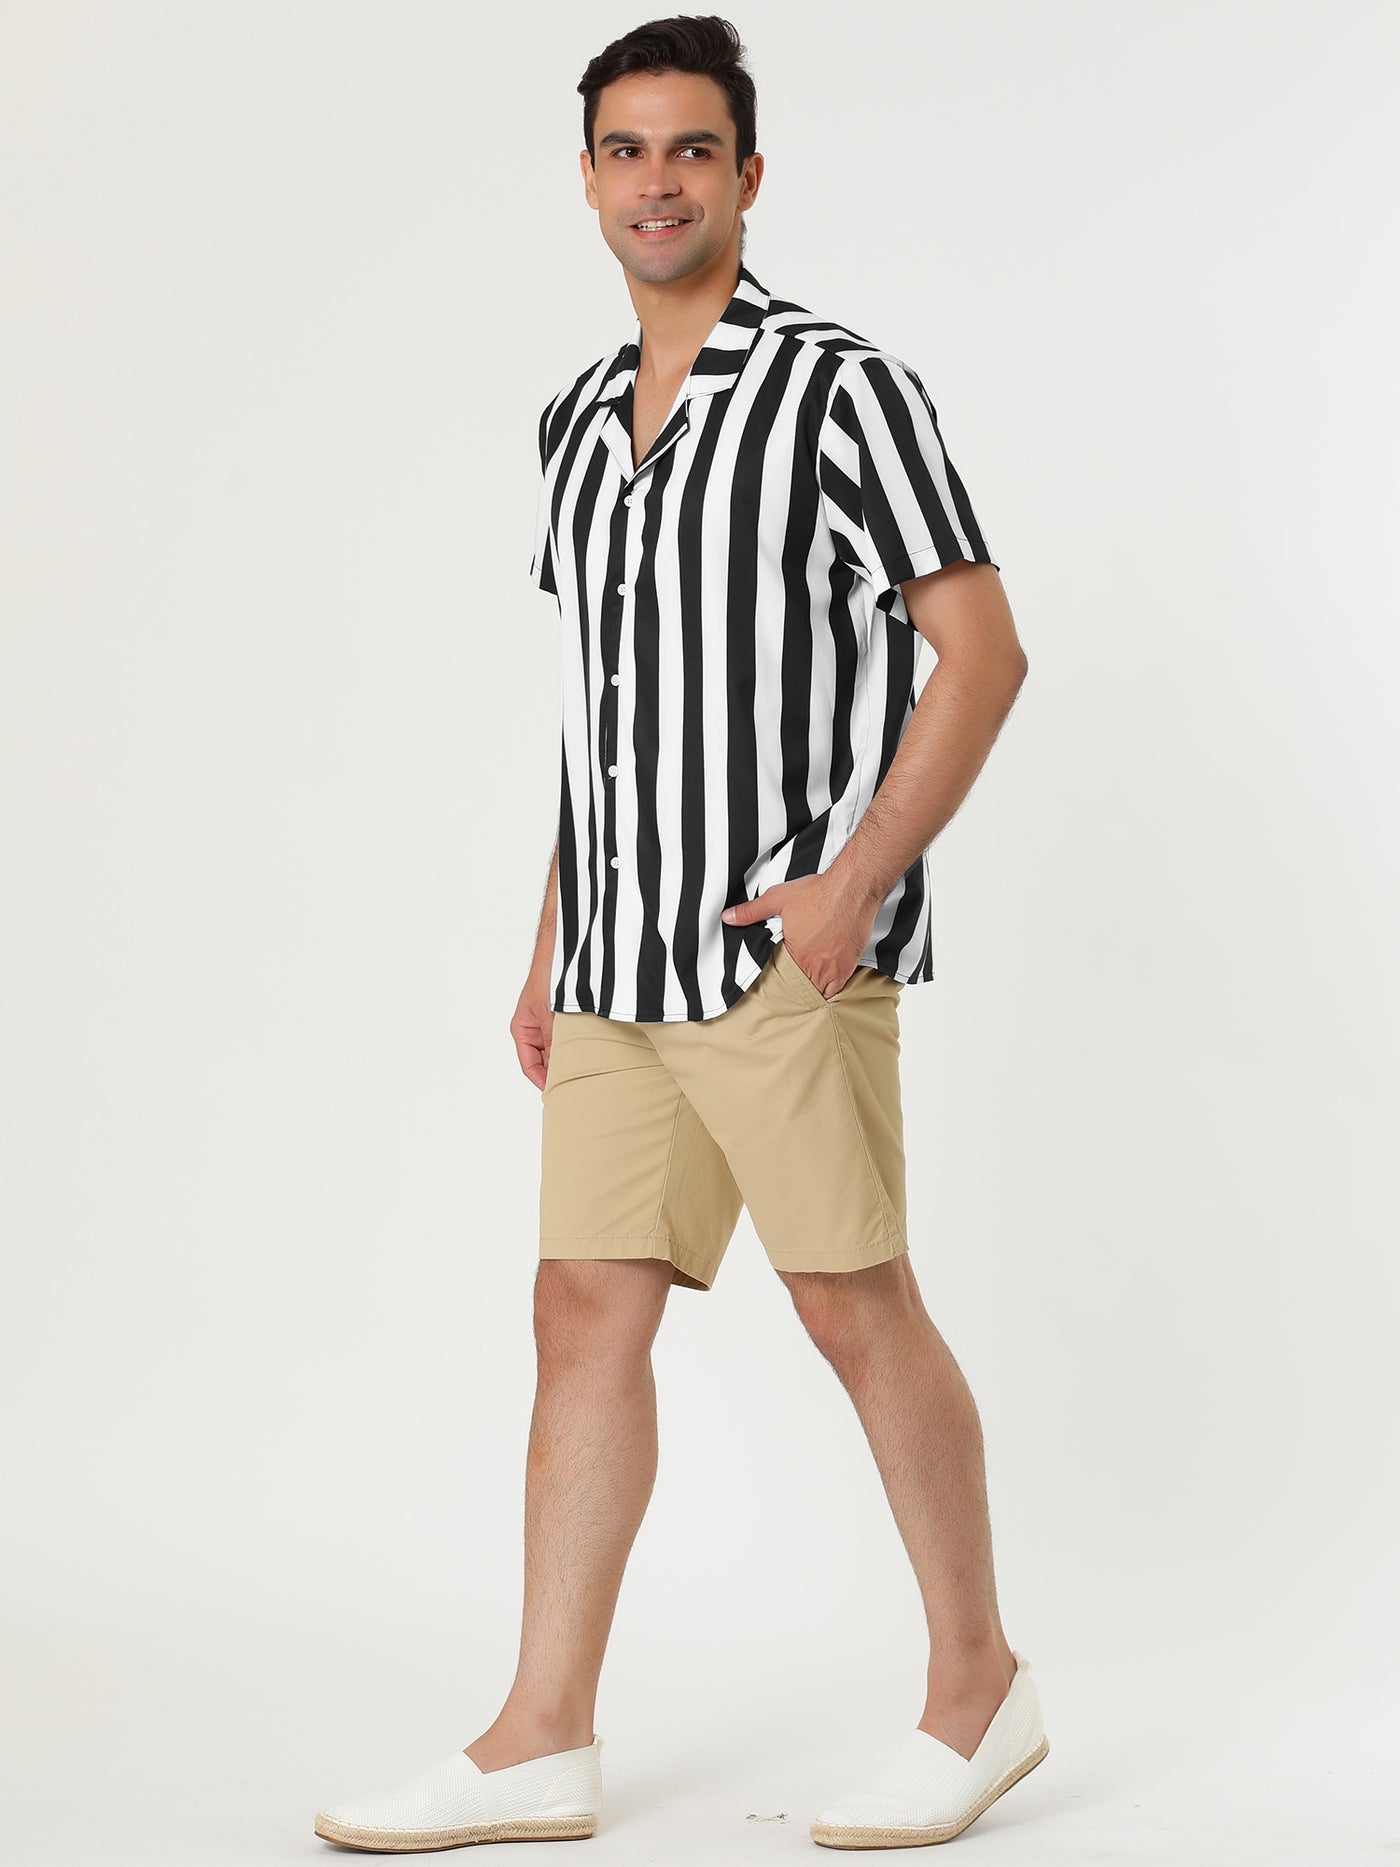 Bublédon Summer Colorful Striped Short Sleeve Button Shirt